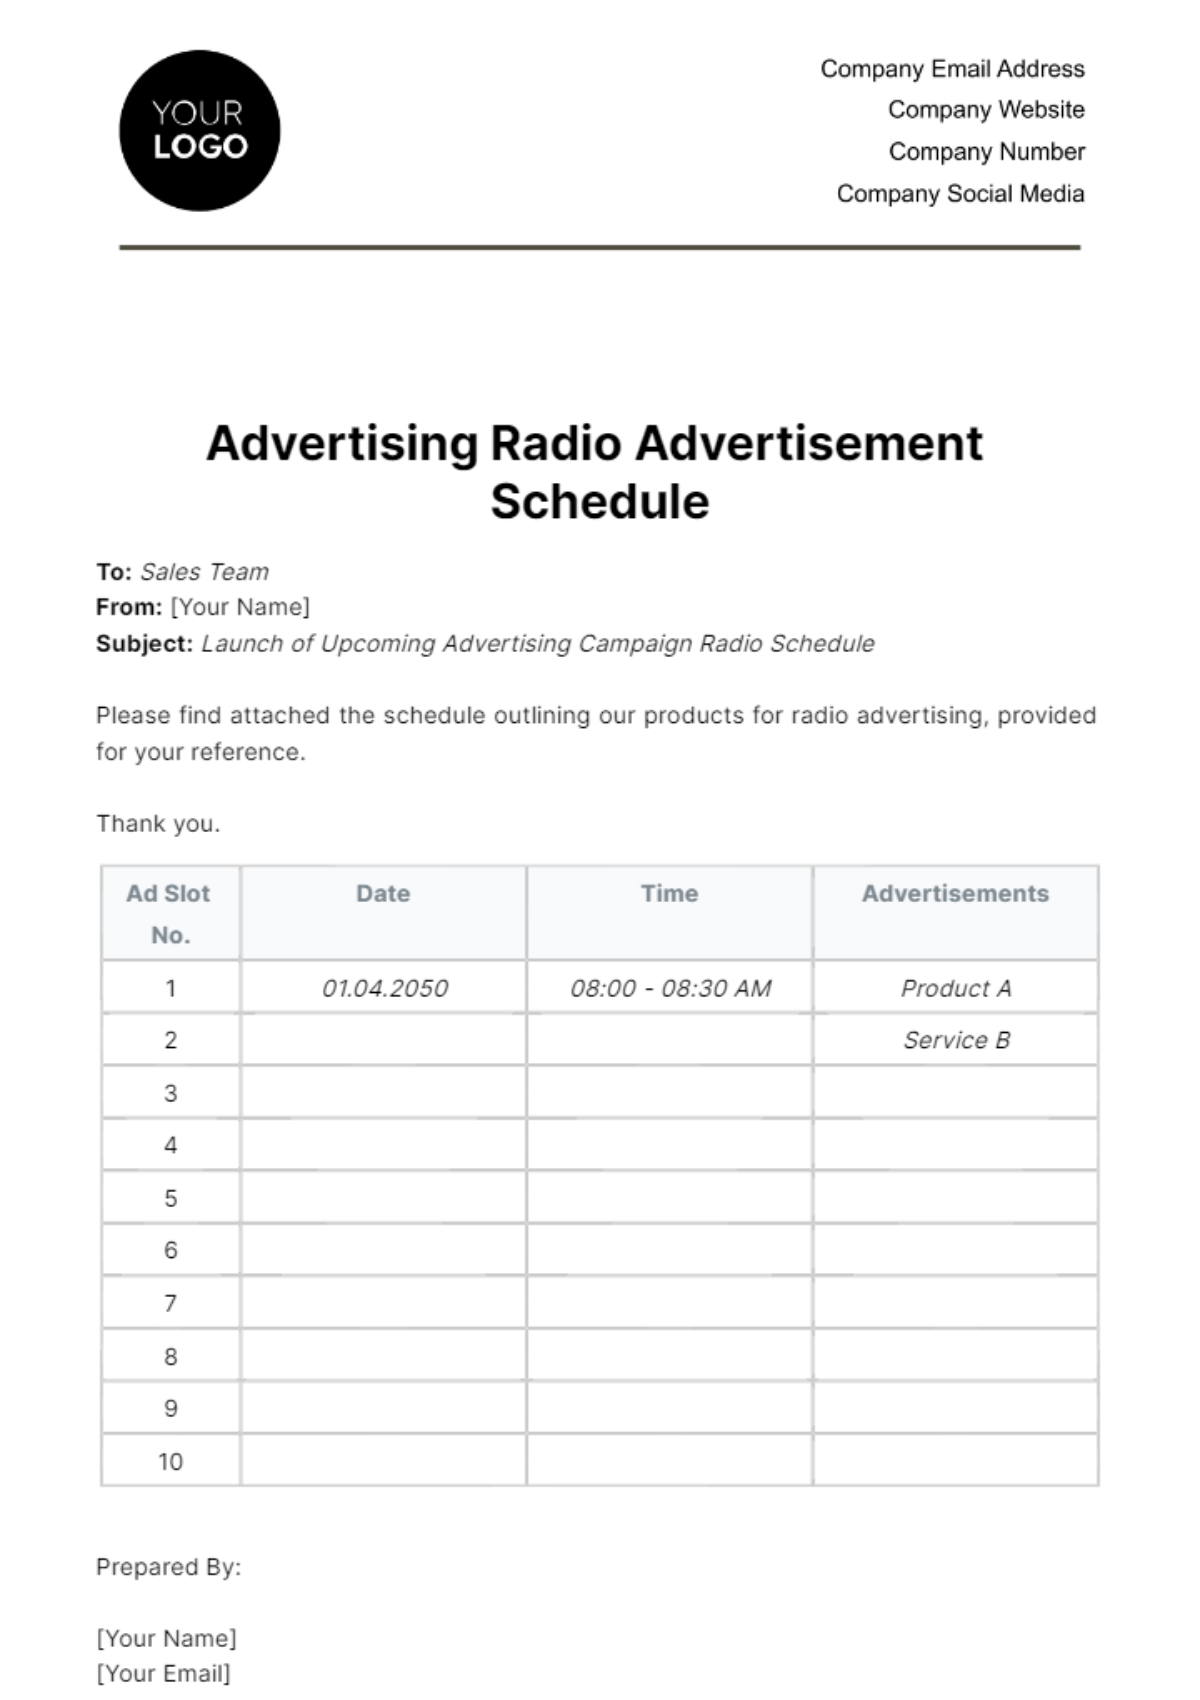 Advertising Radio Advertisement Schedule Template